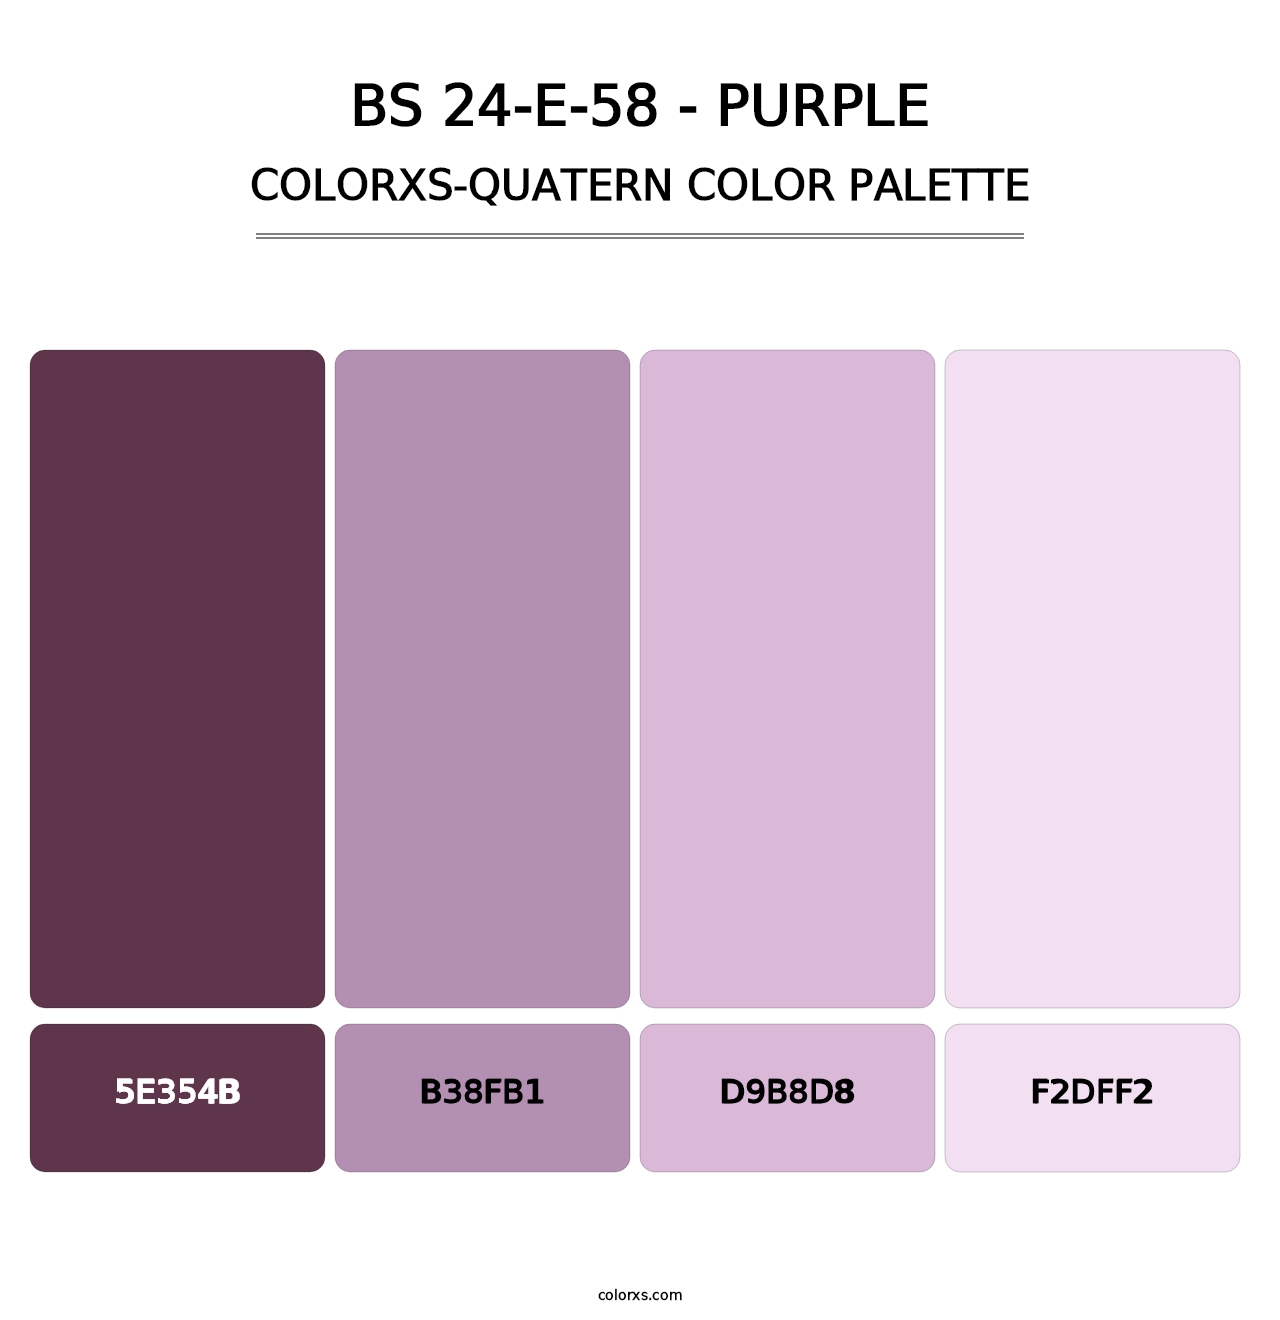 BS 24-E-58 - Purple - Colorxs Quatern Palette